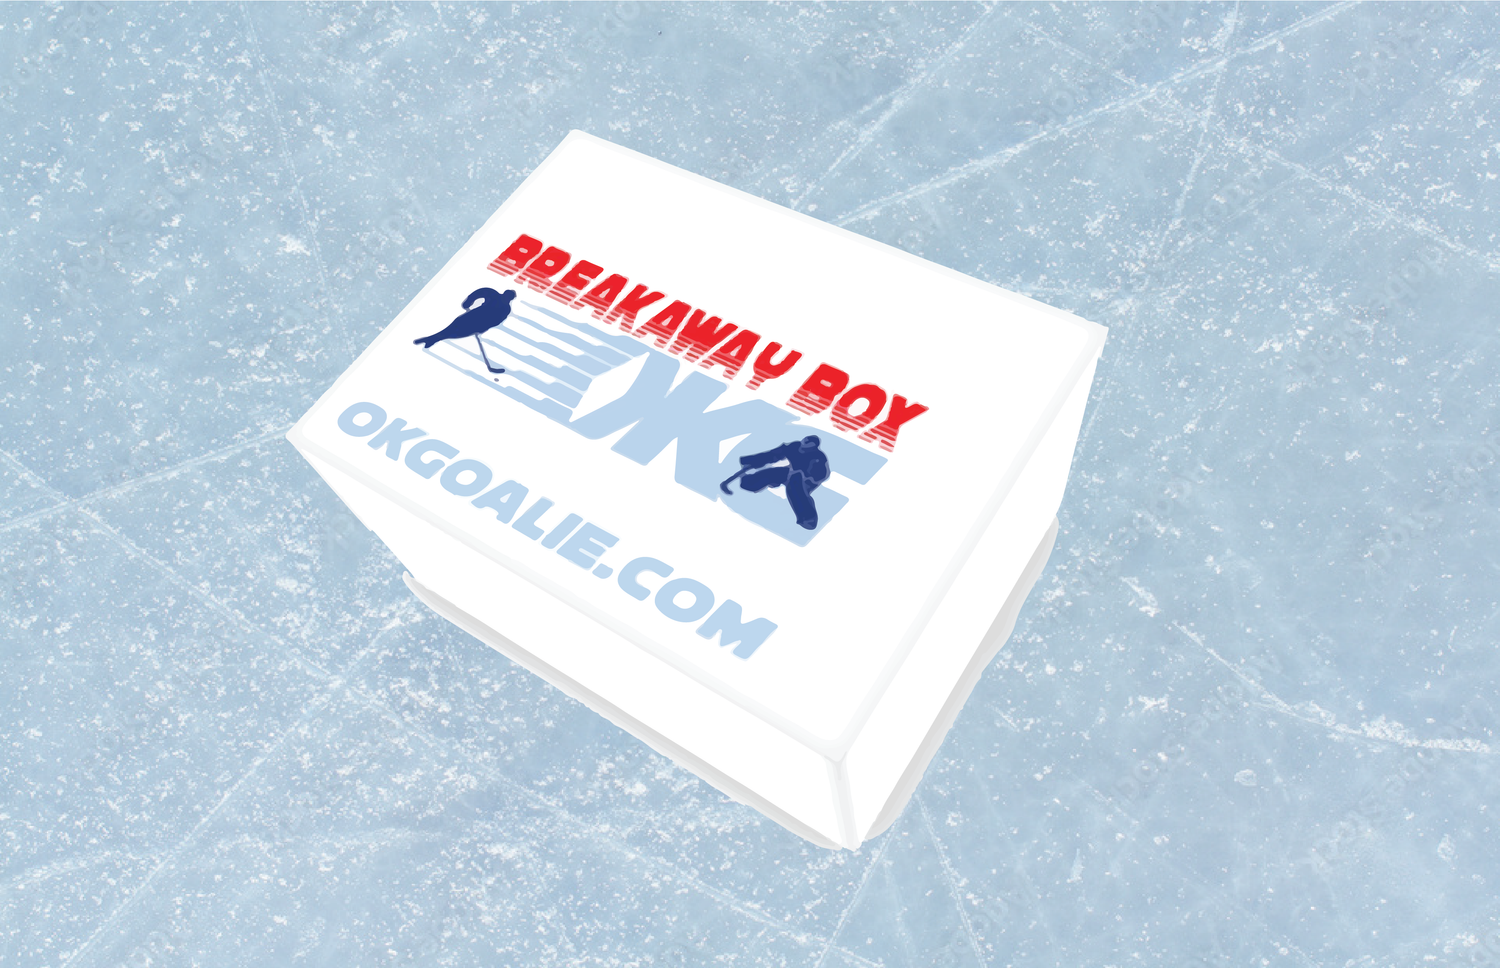 Phucking Pheasants Hockey Jersey – okgoalie